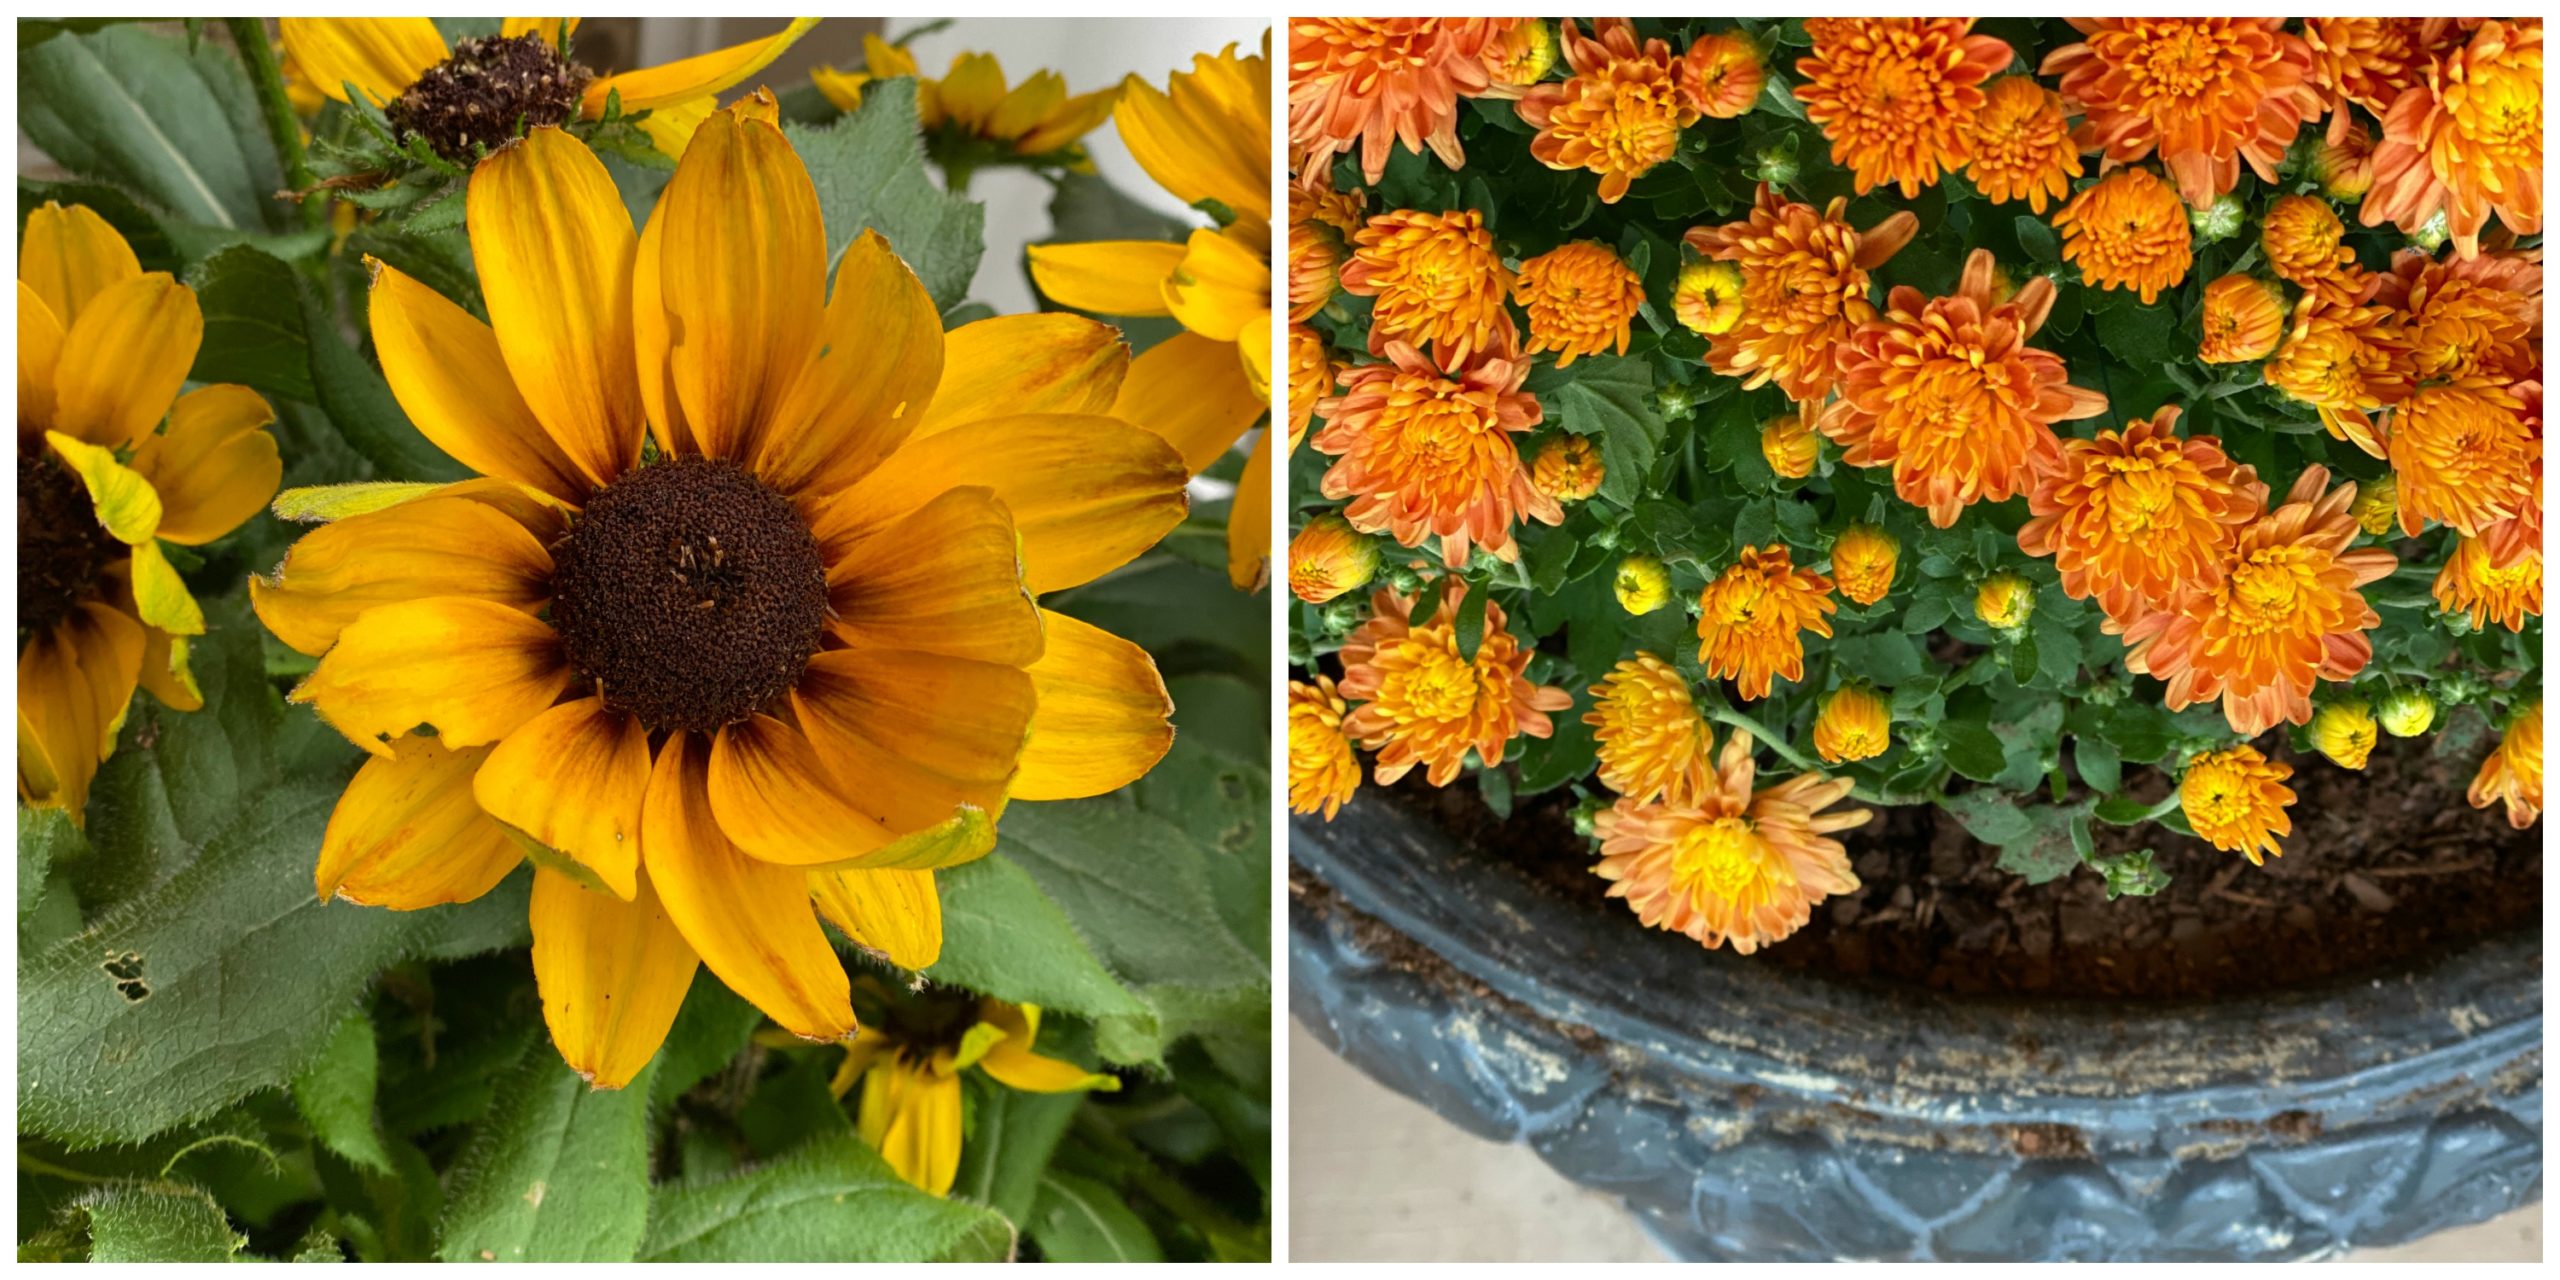 Burgundy, yellow and orange mums and sunflowers